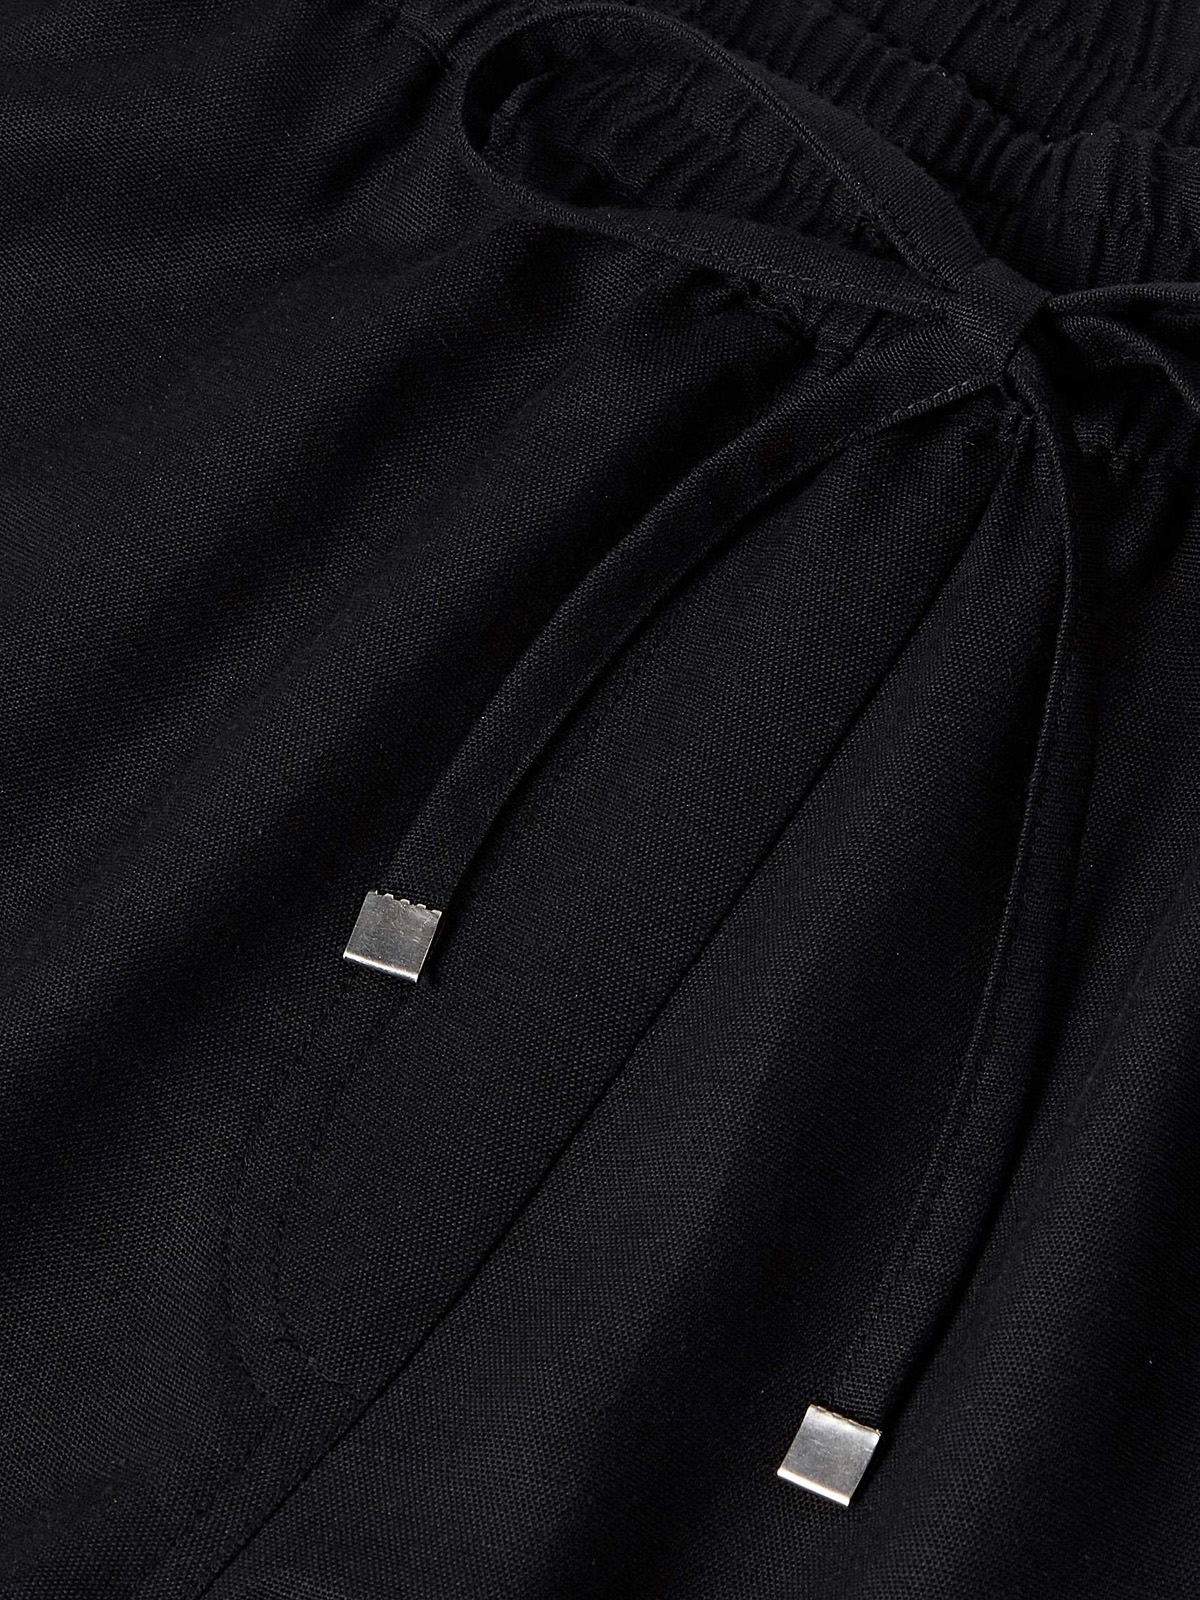 Wholesale Plus Size Boutique Clothing by Anthology - - BLACK Linen ...